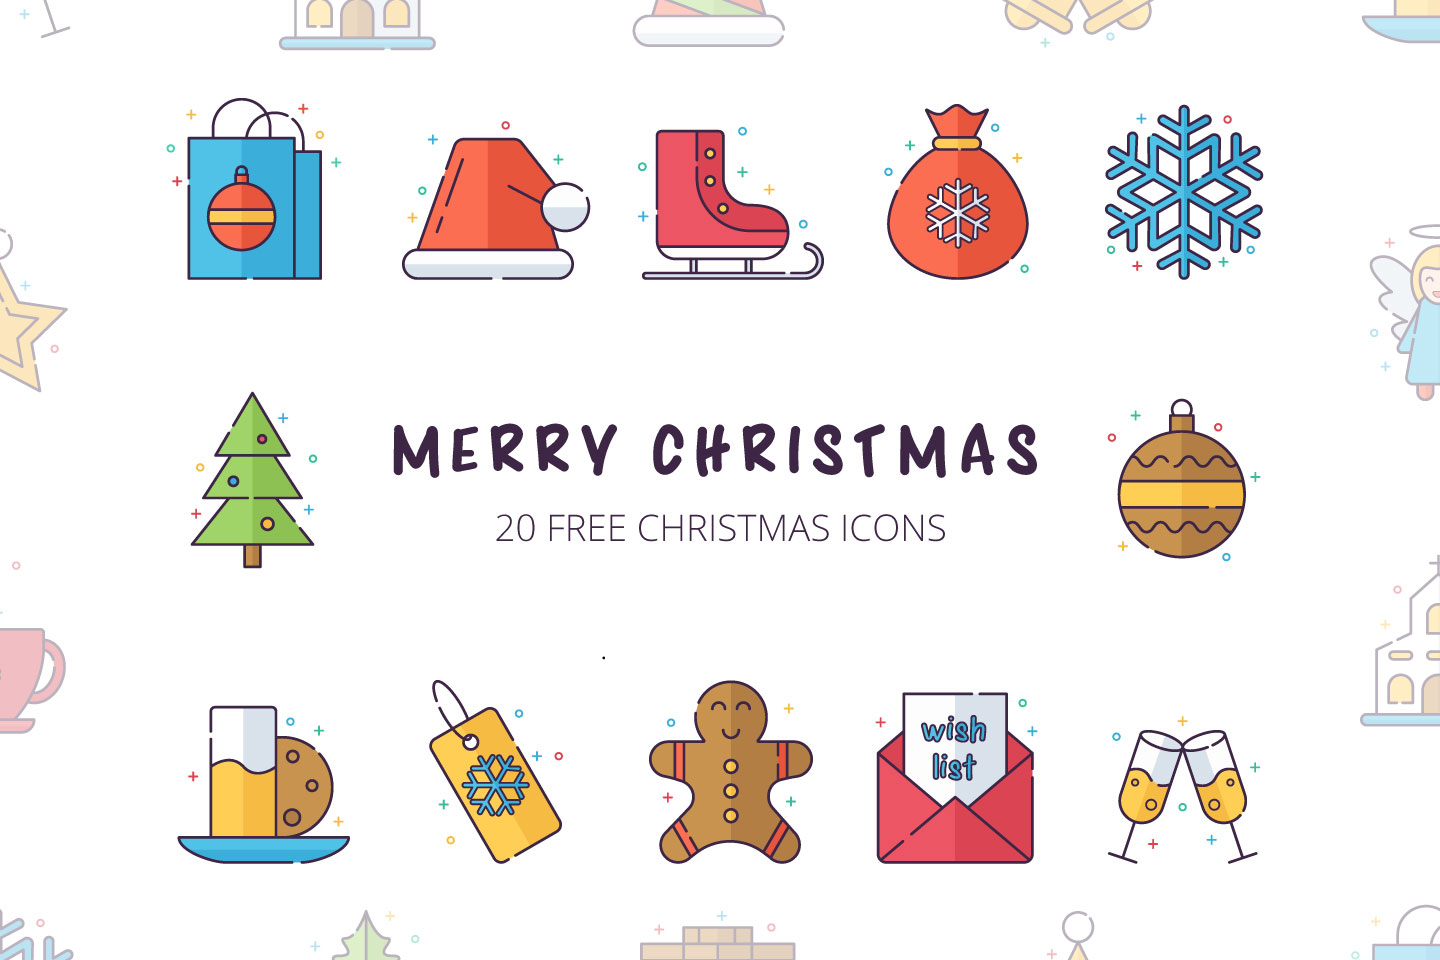 https://img.graphicsurf.com/2018/10/merry-christmas-vector-free-icon-set1.jpg